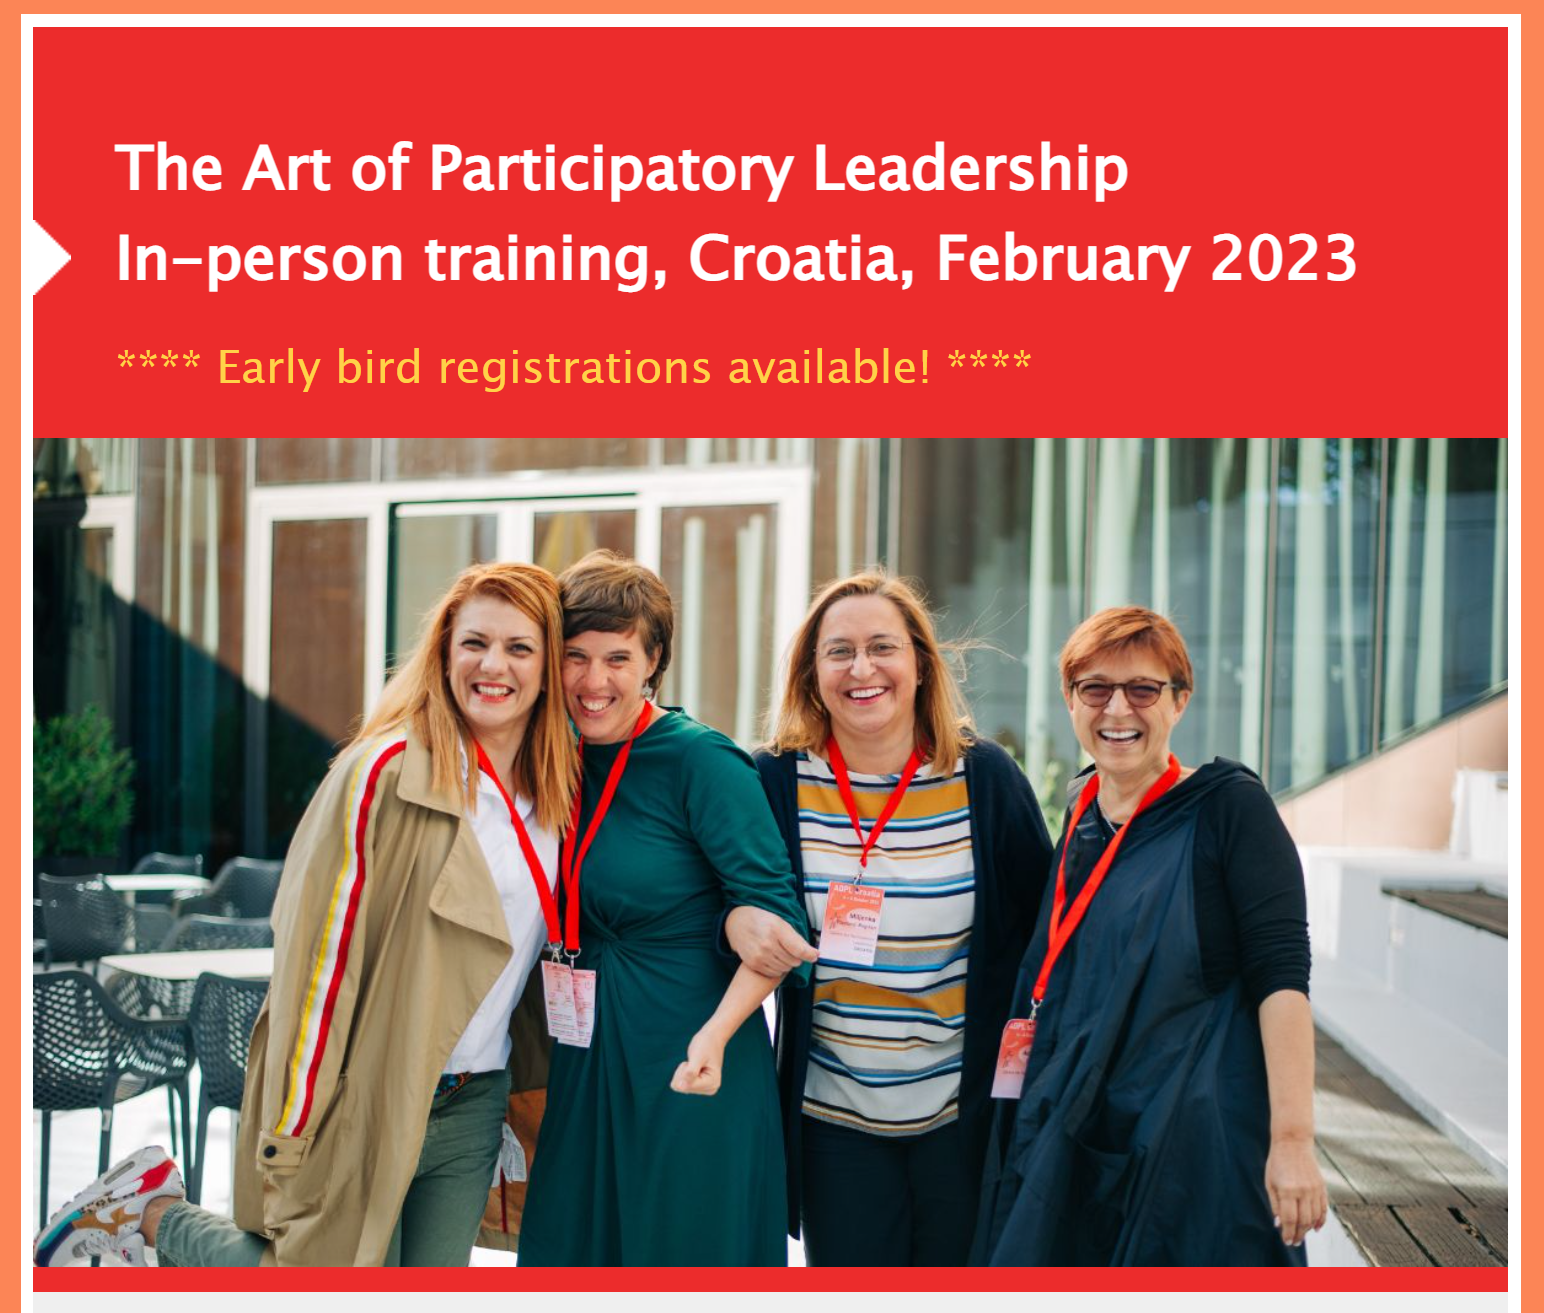 The Art of Participatory Leadership – international training in Croatia